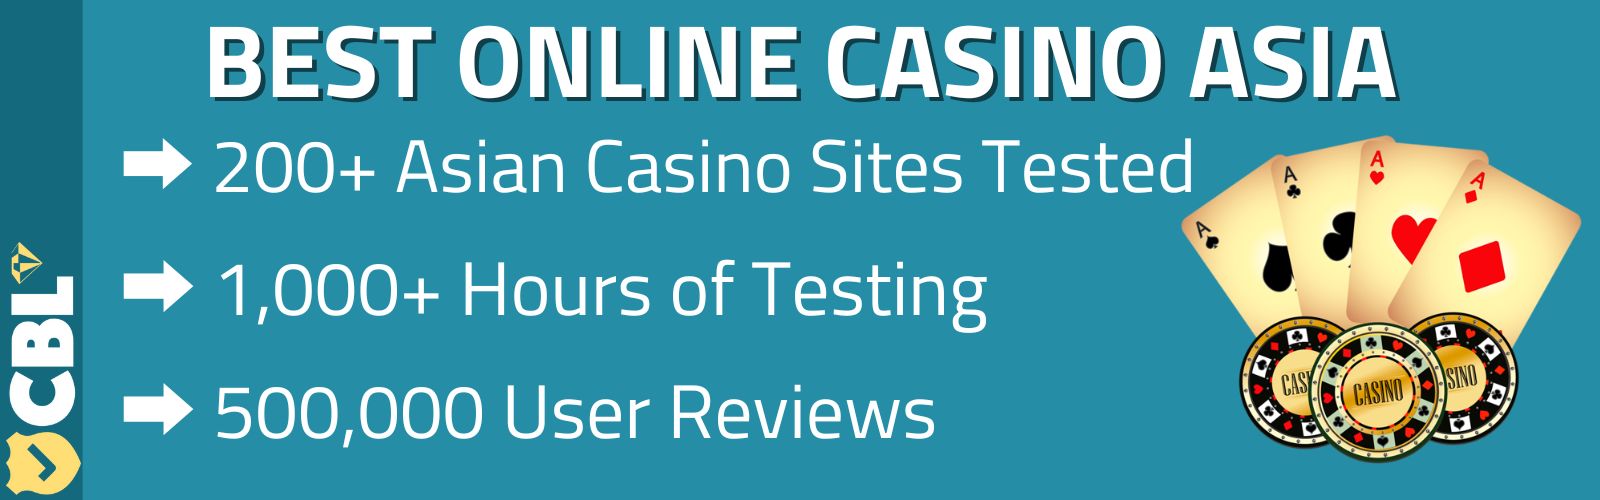 Best Online Casino Asia